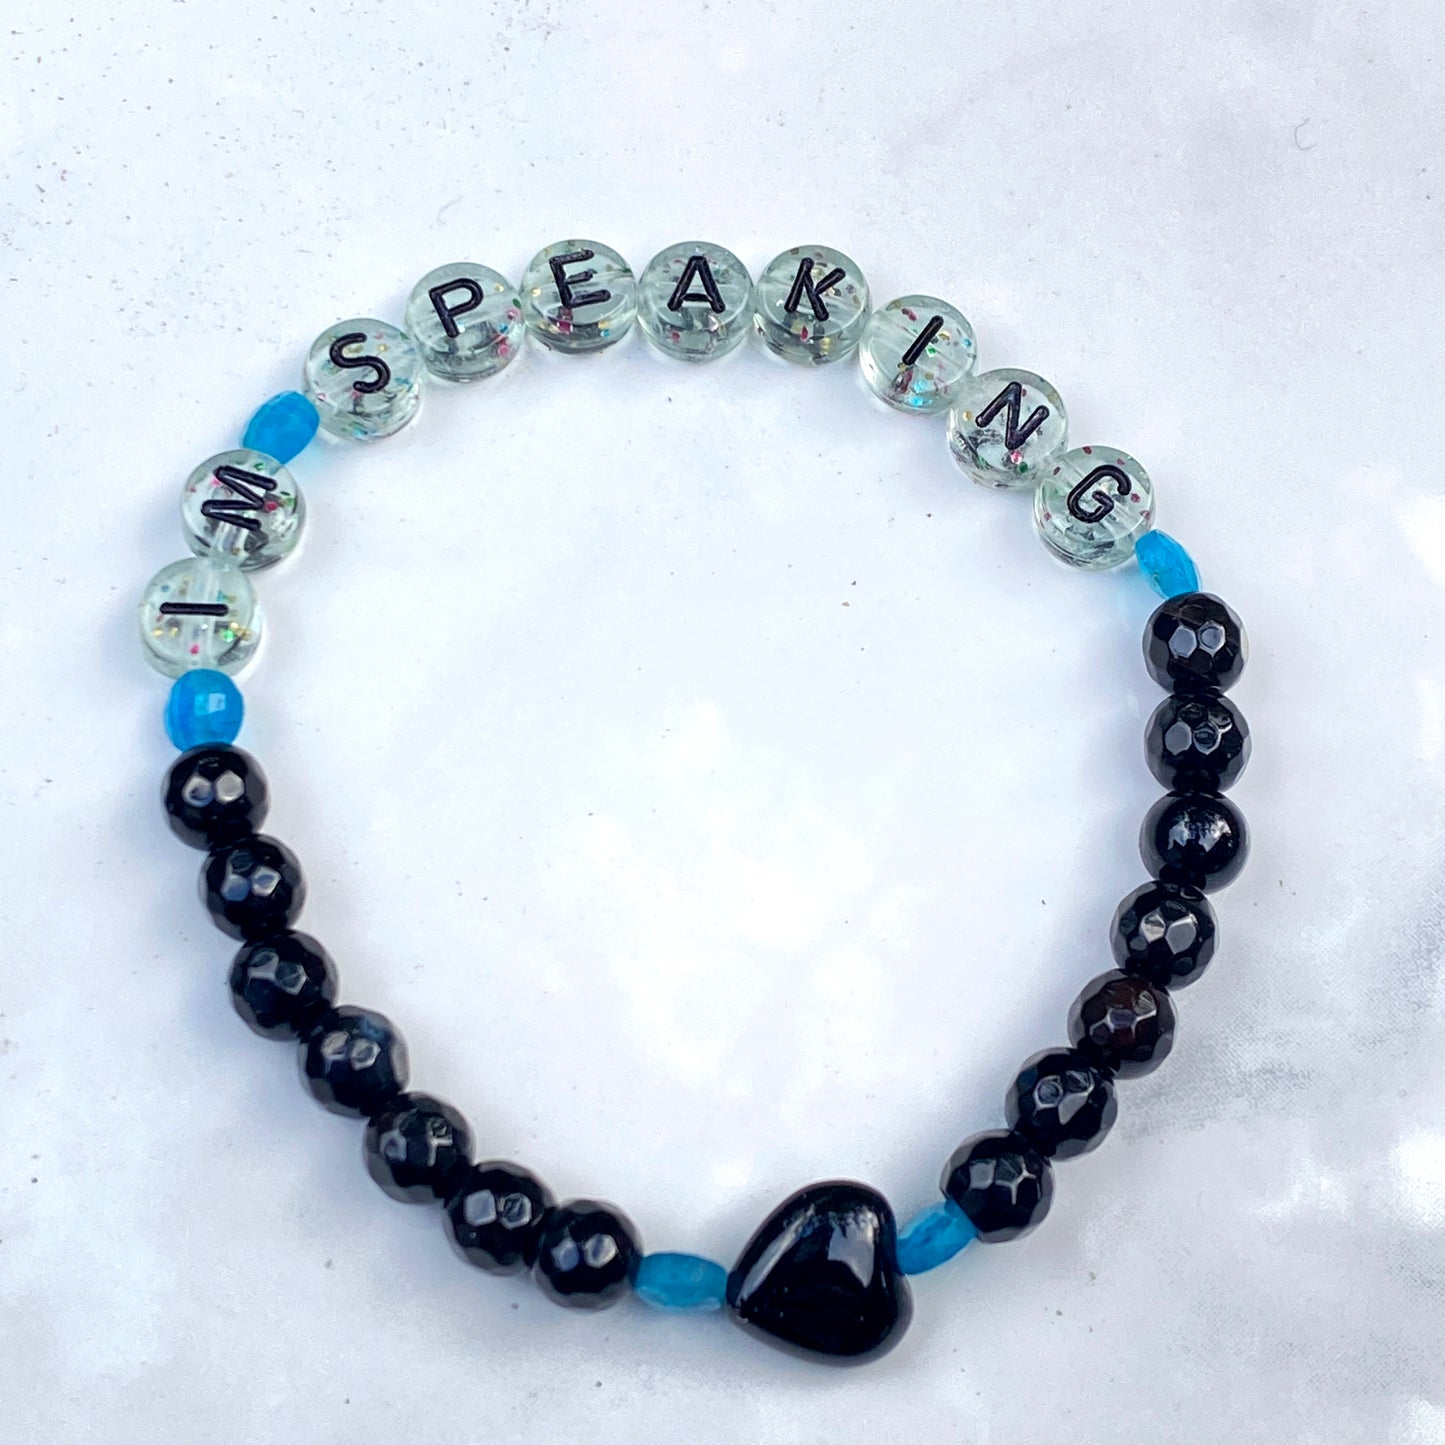 Women's "I'M SPEAKING" Gemstone Bracelets